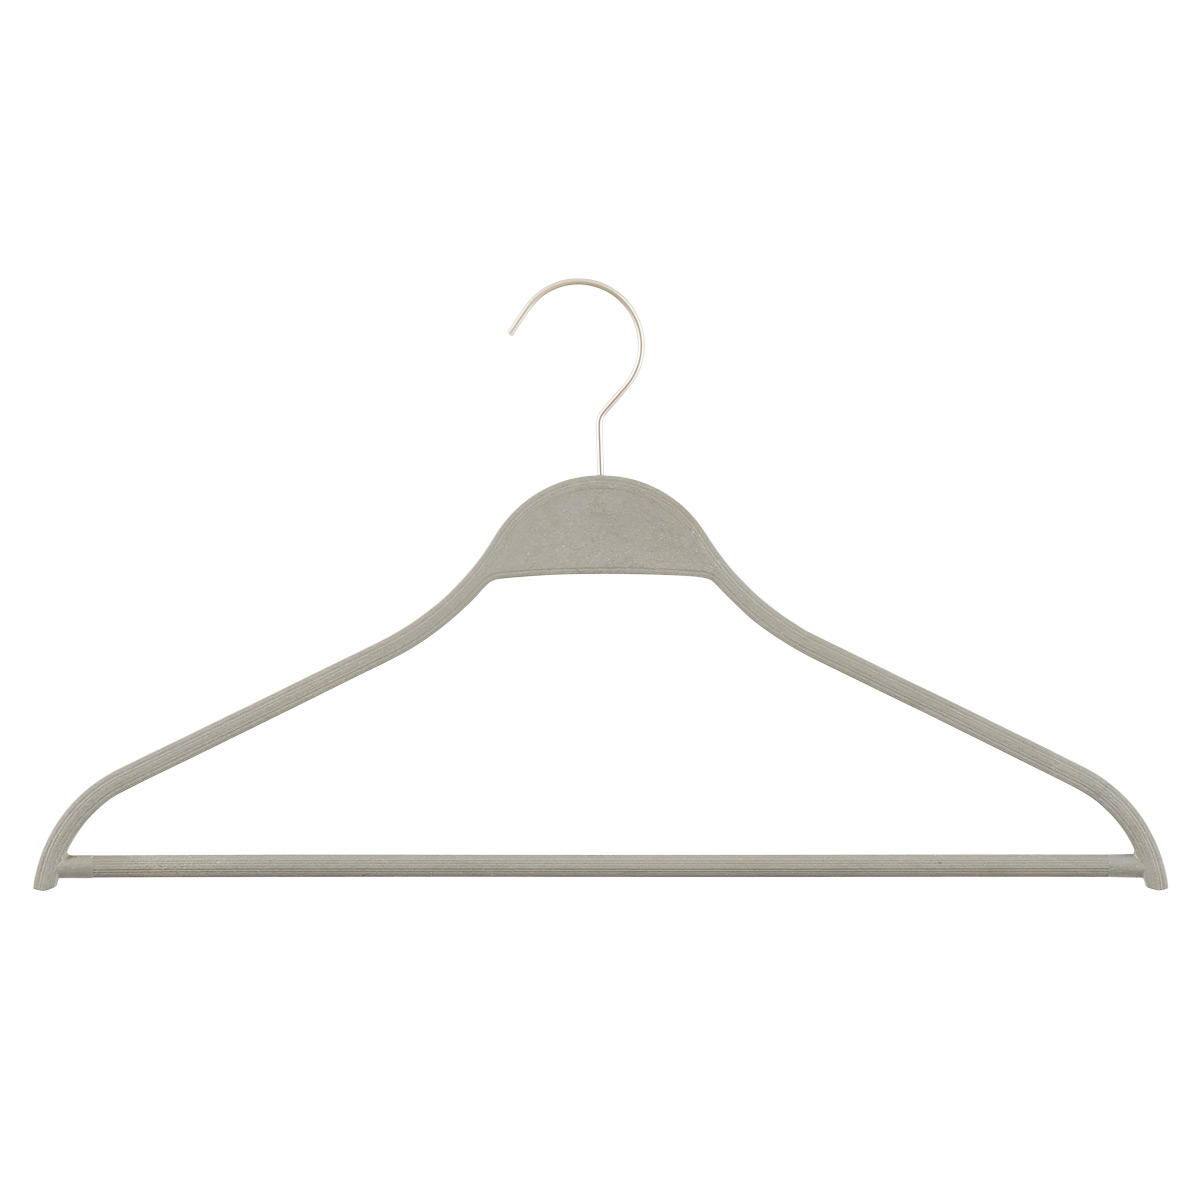 https://www.containerstore.com/catalogimages/384501/10080311-Eco-plastic-suit-hanger-gre.jpg